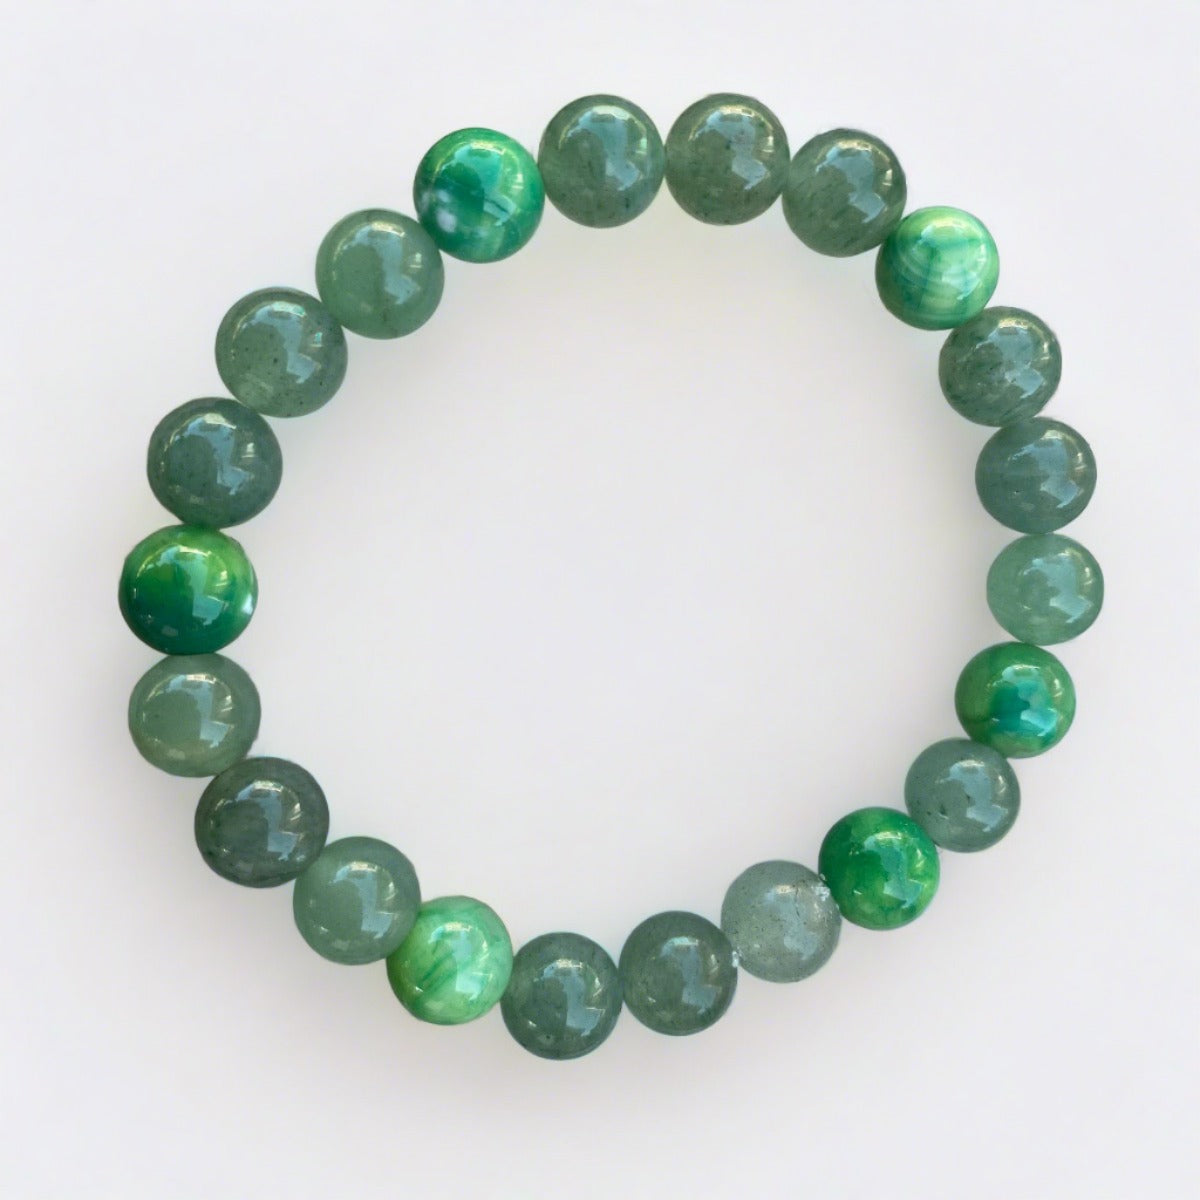 A stretch cord bracelet featuring green aventurine and agate gemstones